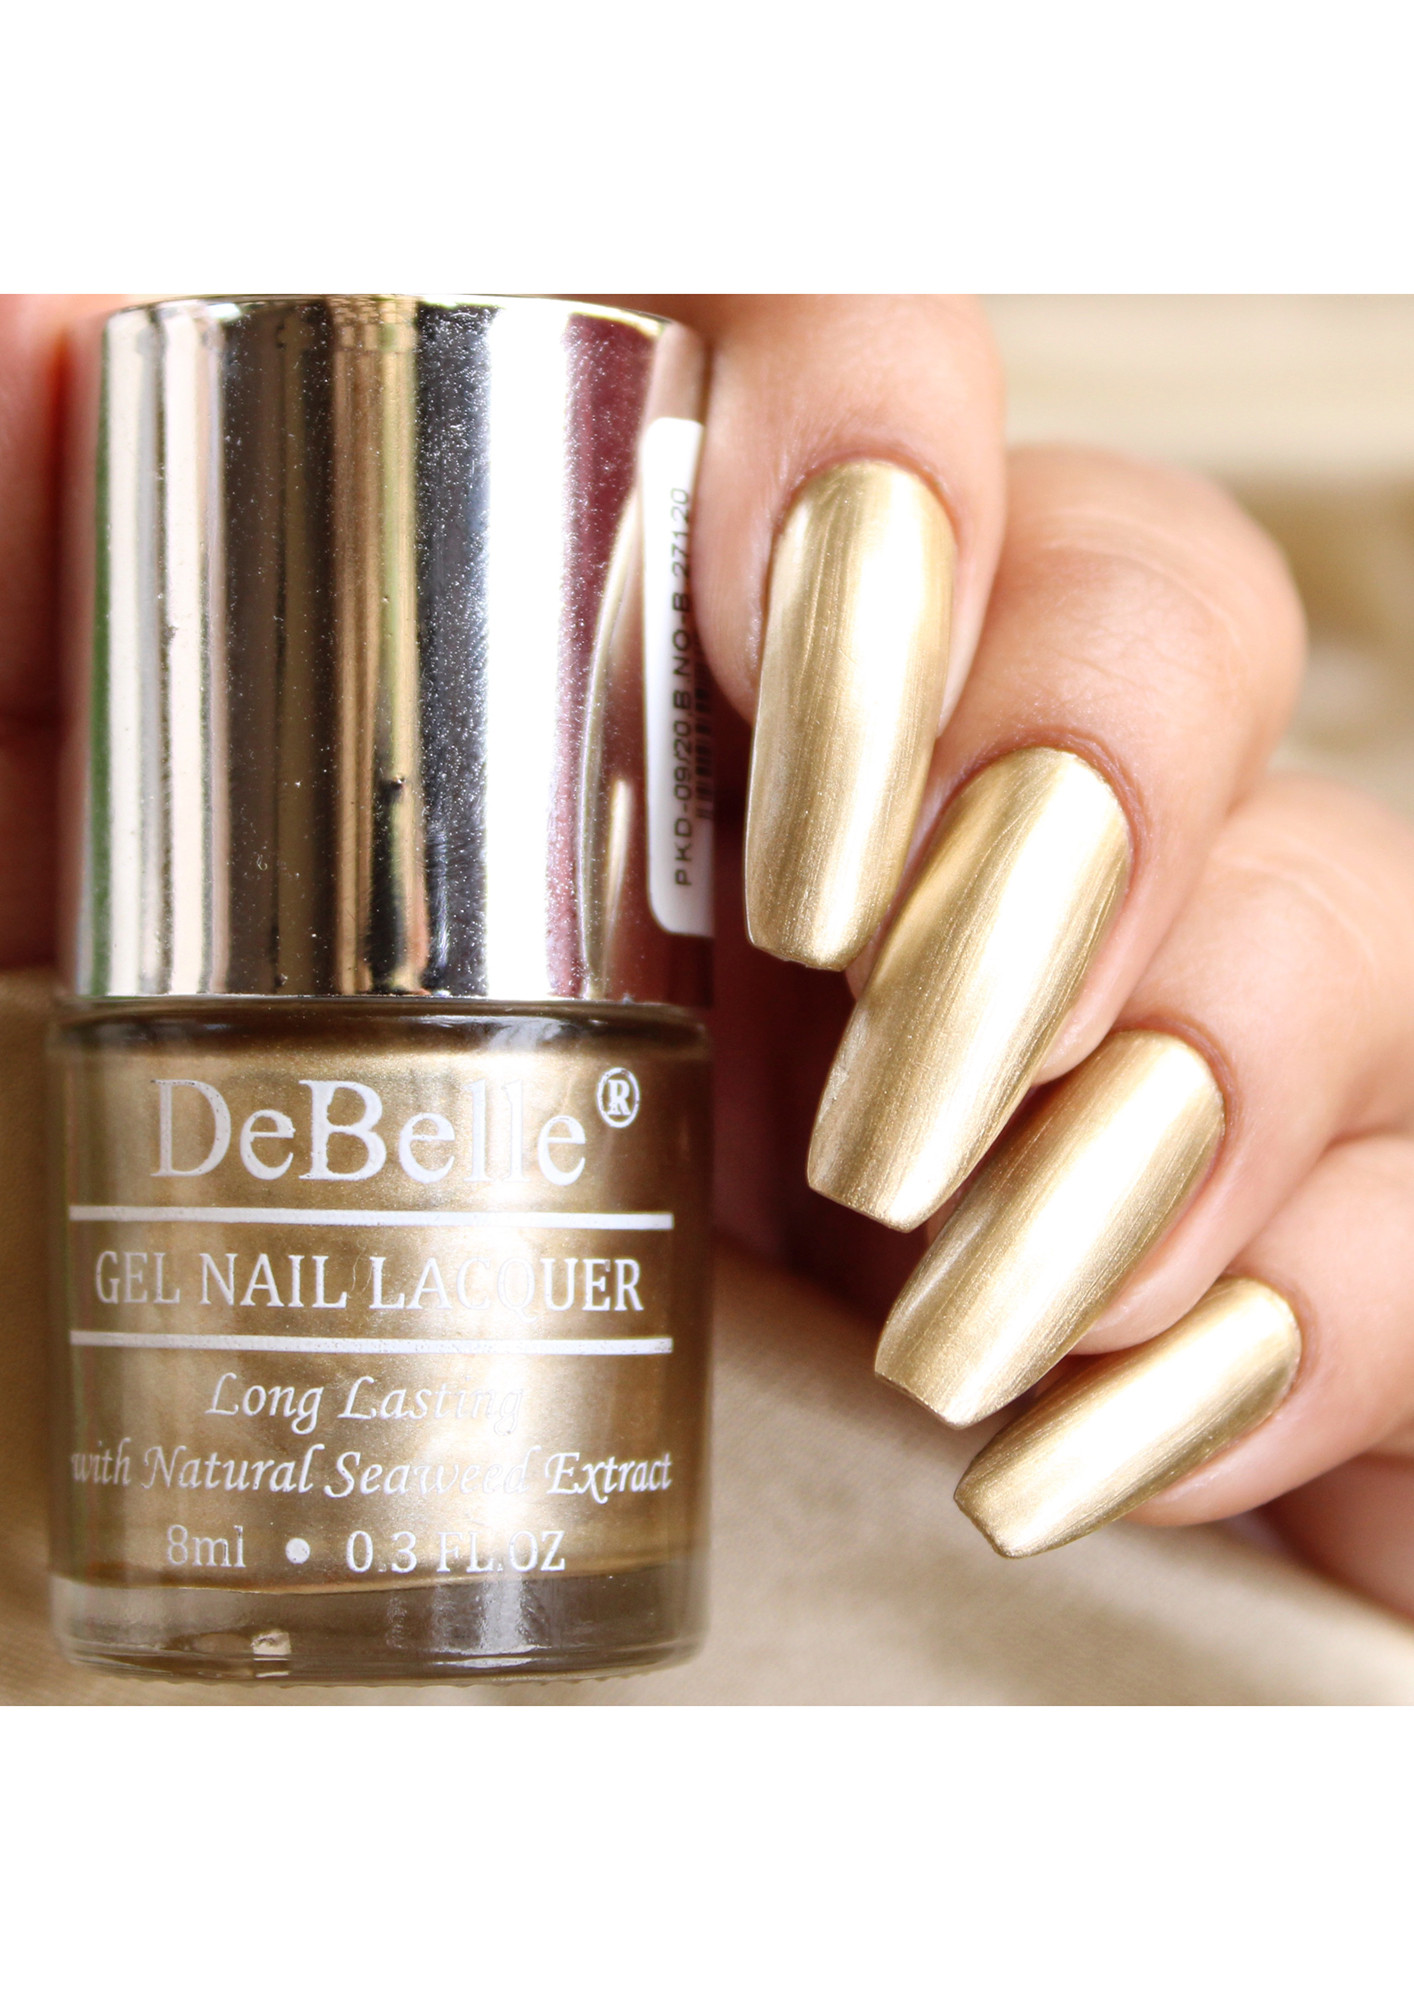 DeBelle Gel Nail Lacquer Chrome Gold Metallic Bright Gold Nail Polish